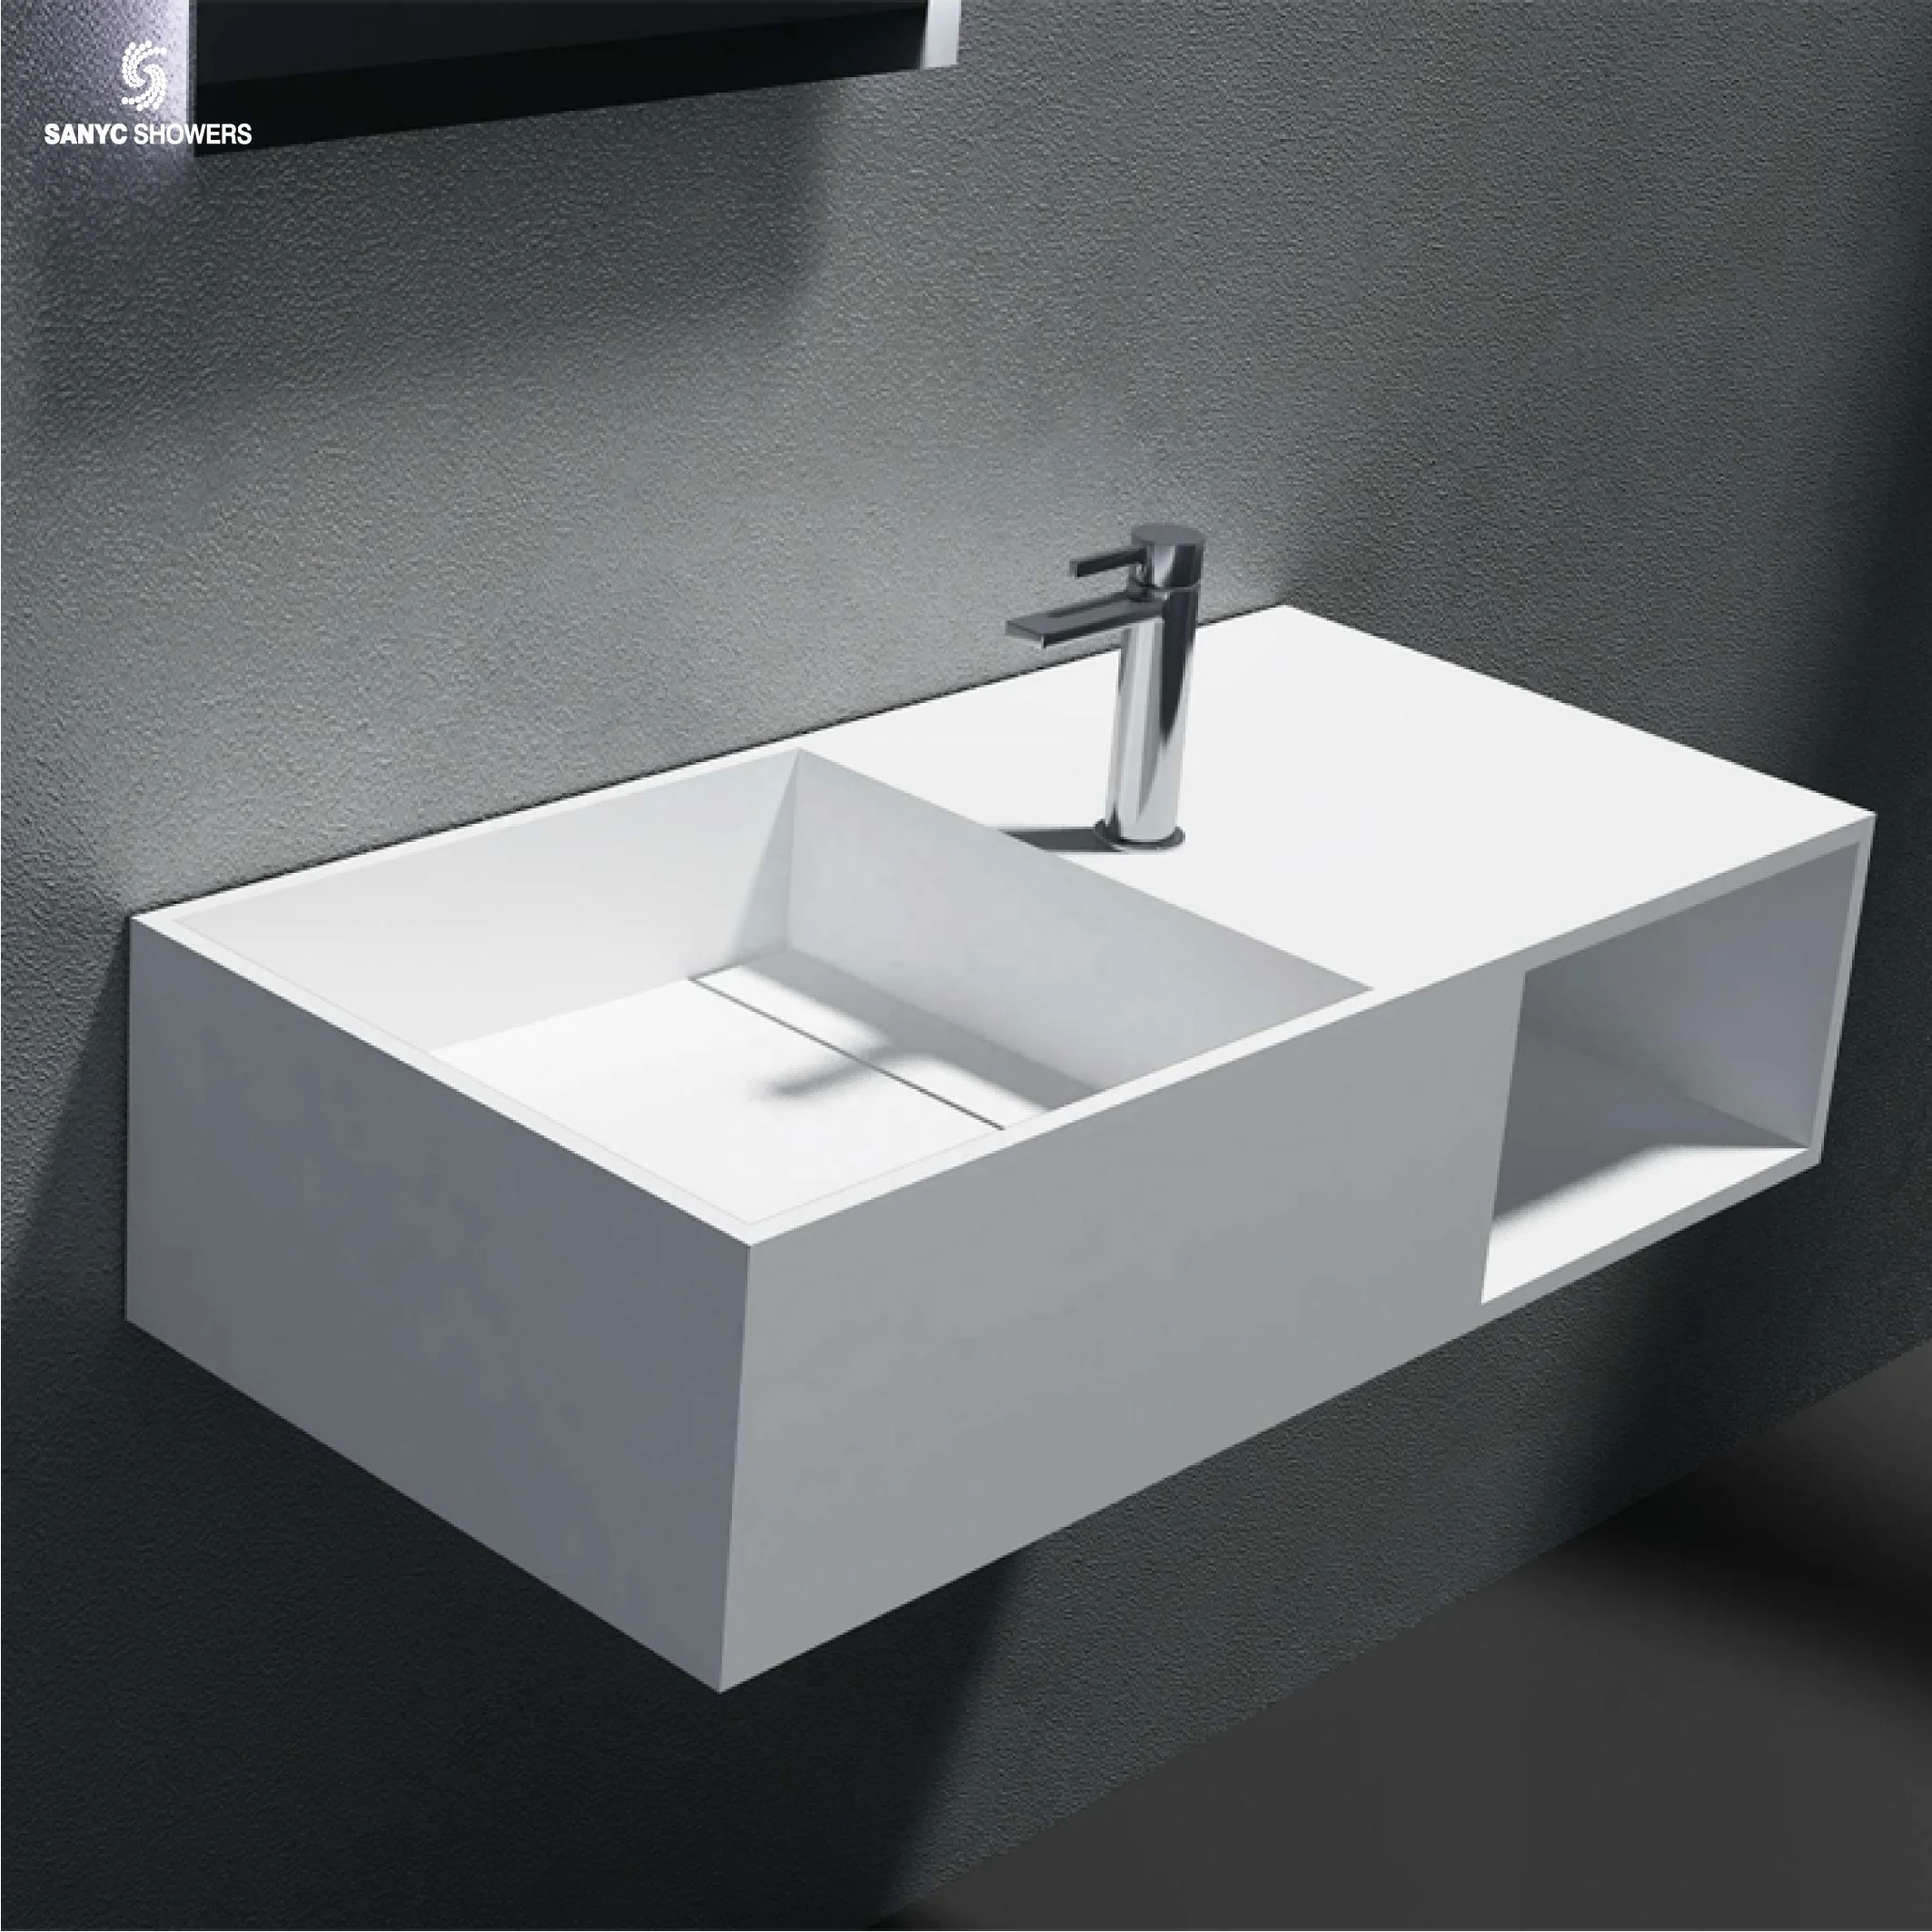 Popular Vanity Sink Cast Stone Basin Vanity Double Lavabo Designs Hotel Sink Bathroom Solid Surface Hanging Basin Buy Customize Bathroom Hanging Basin